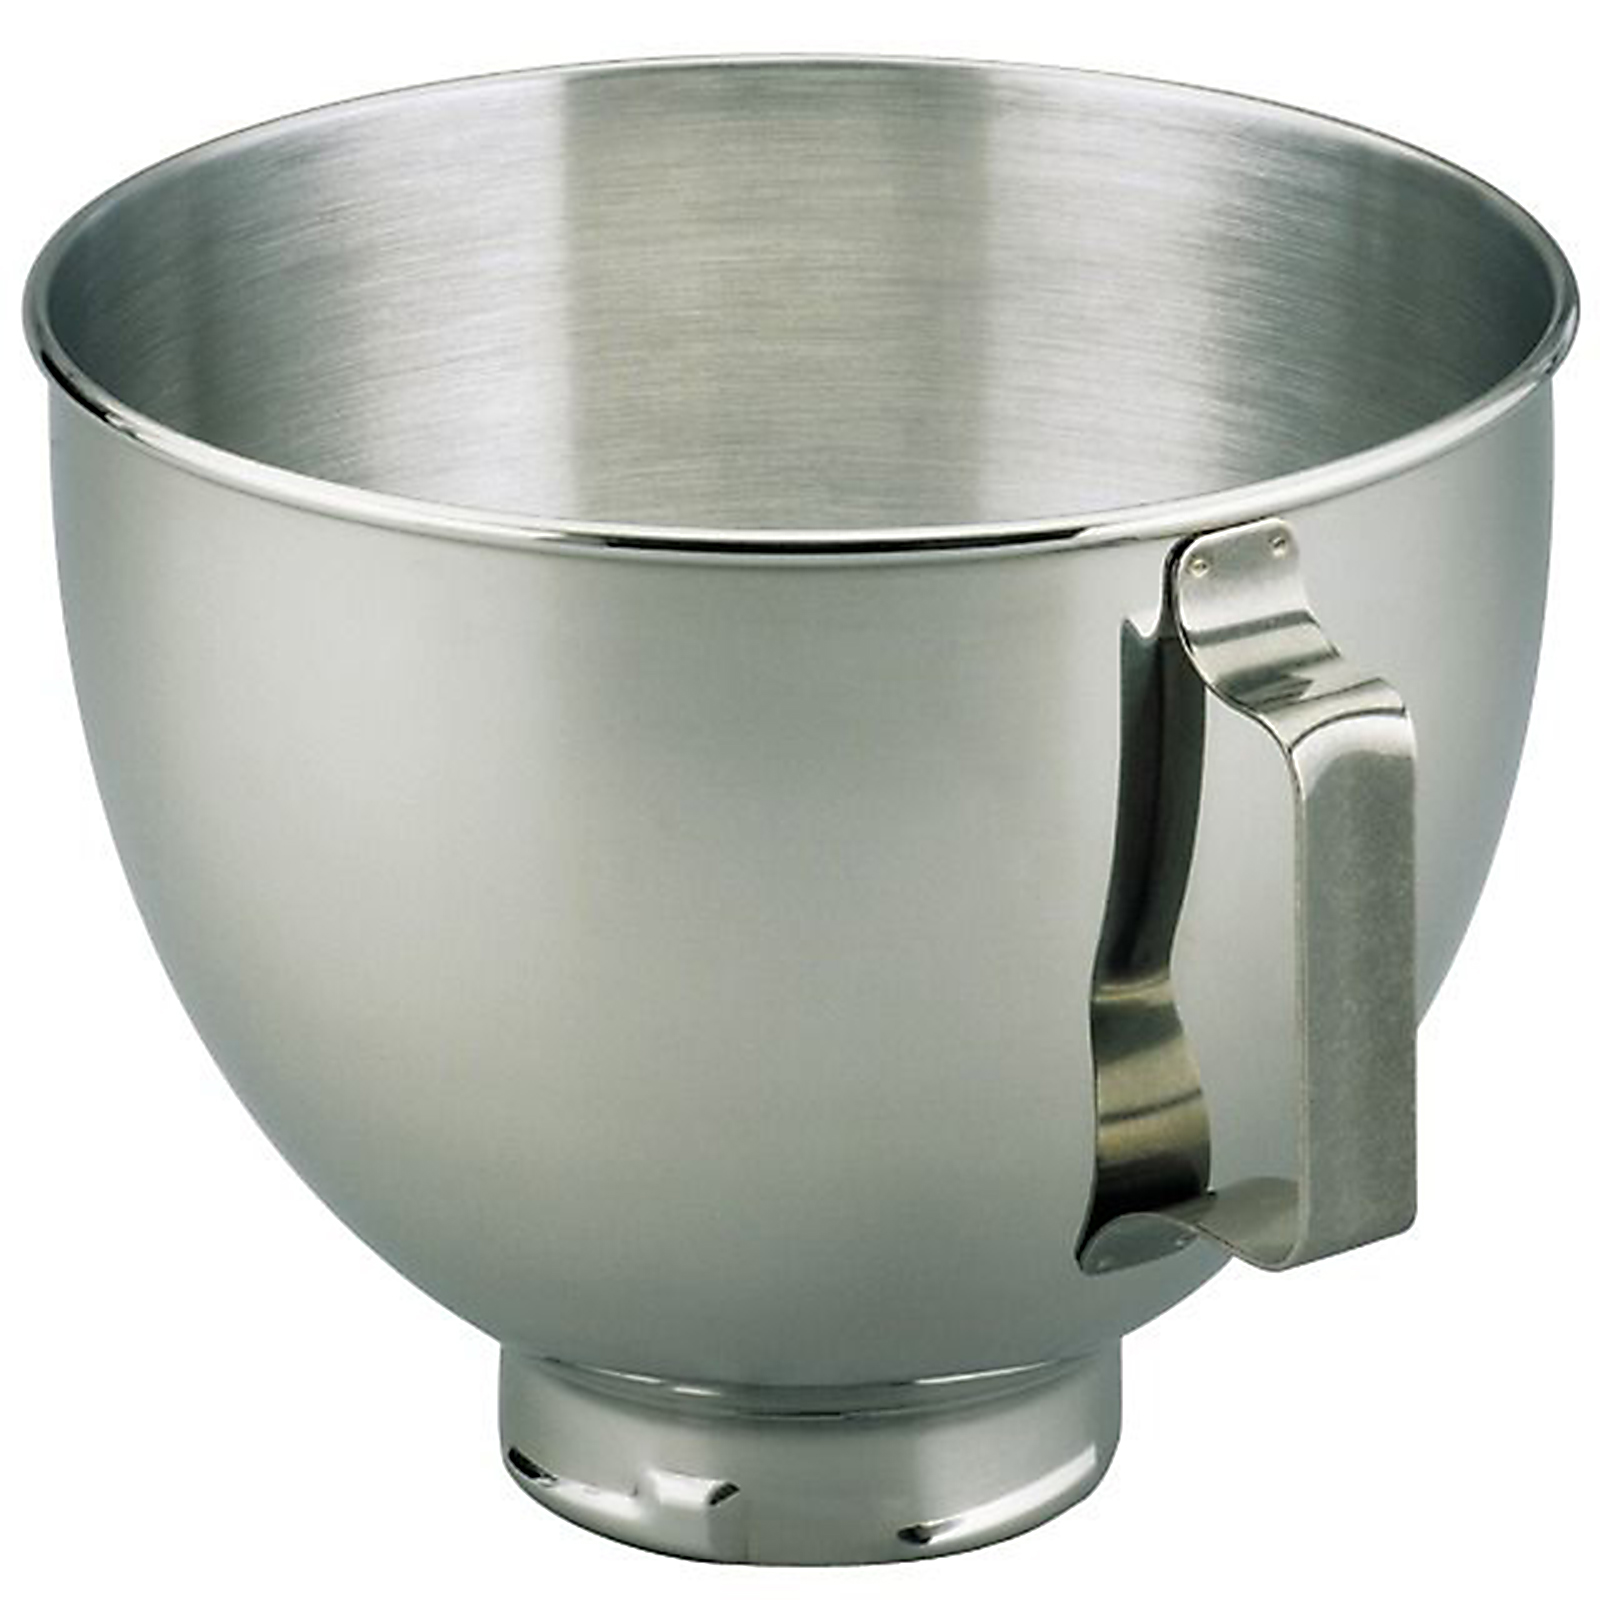 KitchenAid K45SBWH 4.5 Quart Stainless Steel Mixing Bowl with Handle Stainless Steel Kitchenaid Mixer Bowl